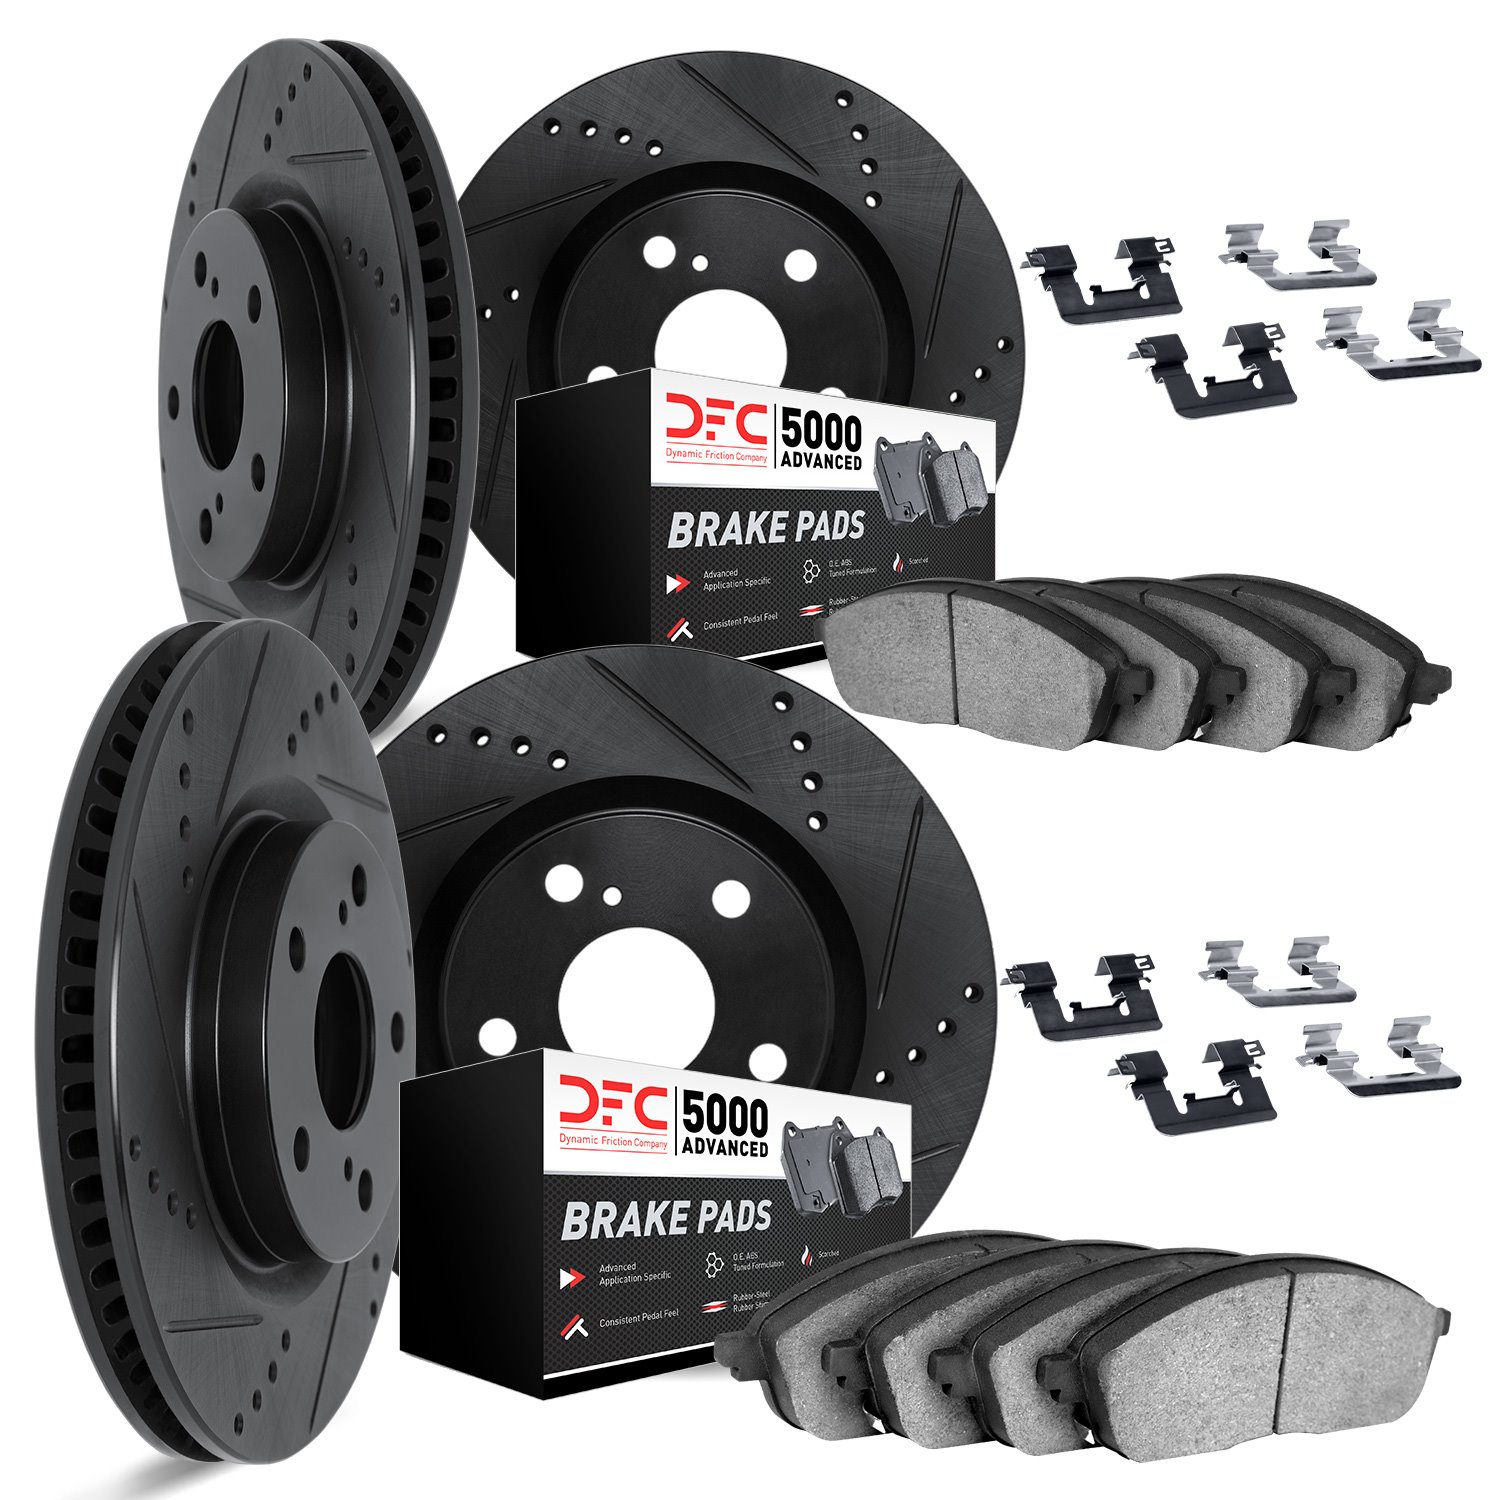 8514-74032 Drilled/Slotted Brake Rotors w/5000 Advanced Brake Pads Kit & Hardware [Black], 2003-2015 Multiple Makes/Models, Posi